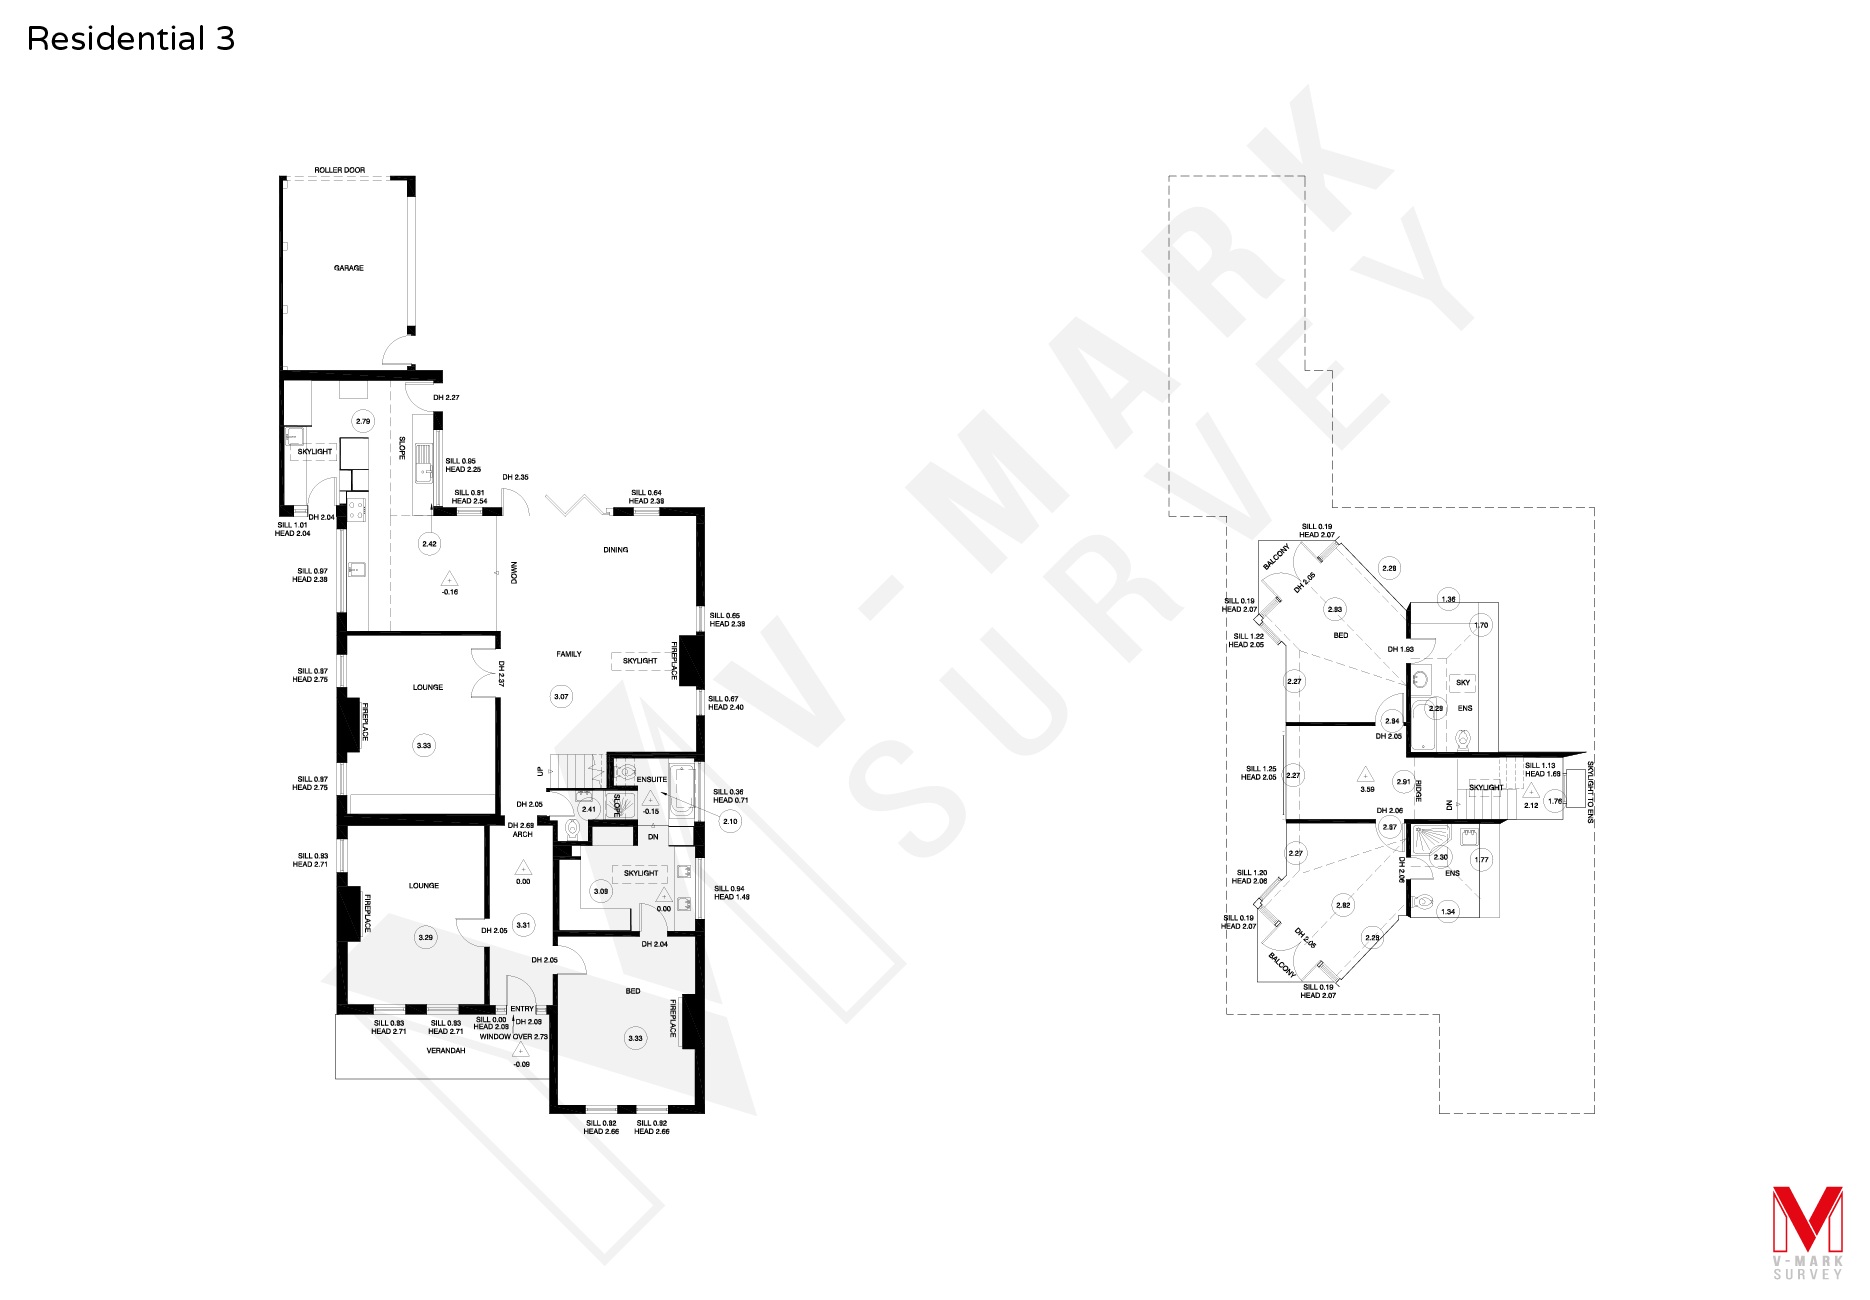 Residential Floorplans